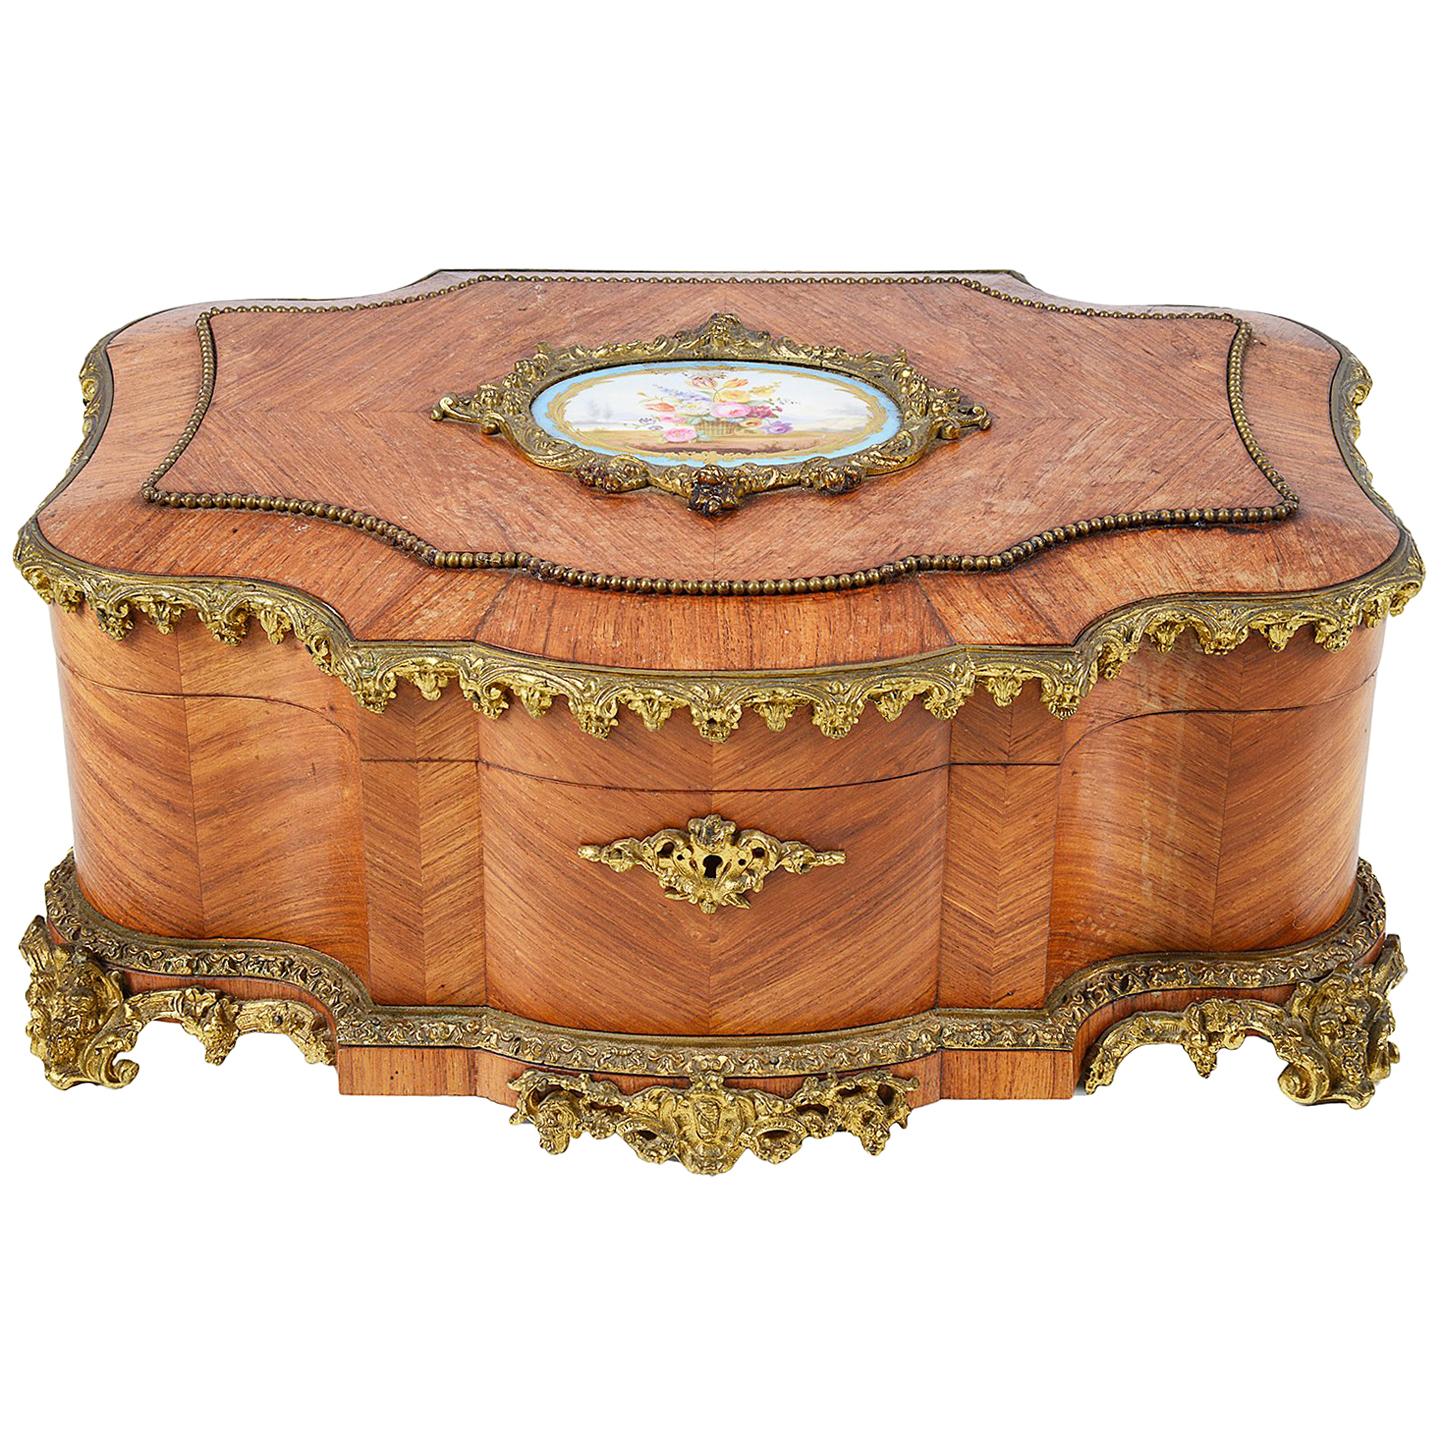 19th Century French Jewelry Box